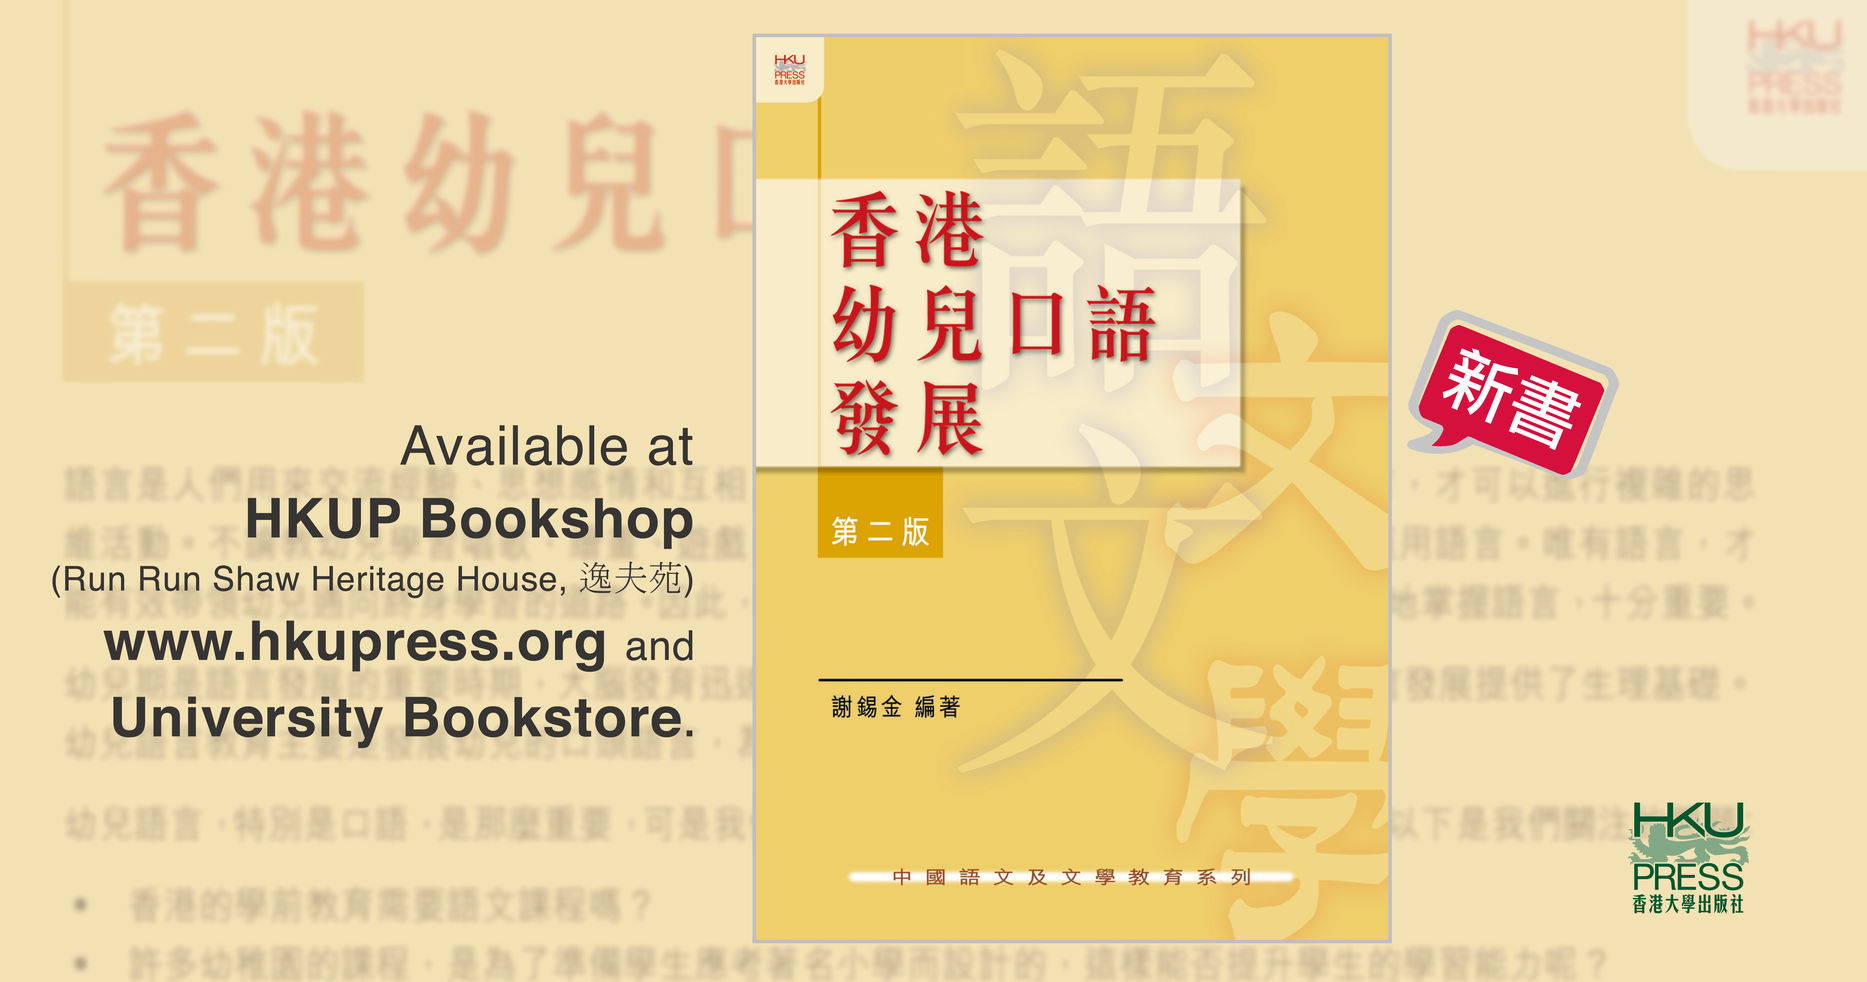  Oral Language Development of Preschool Children, Second Edition (Text in Chinese) 香港幼兒口語發展 第二版, 謝錫金 編著